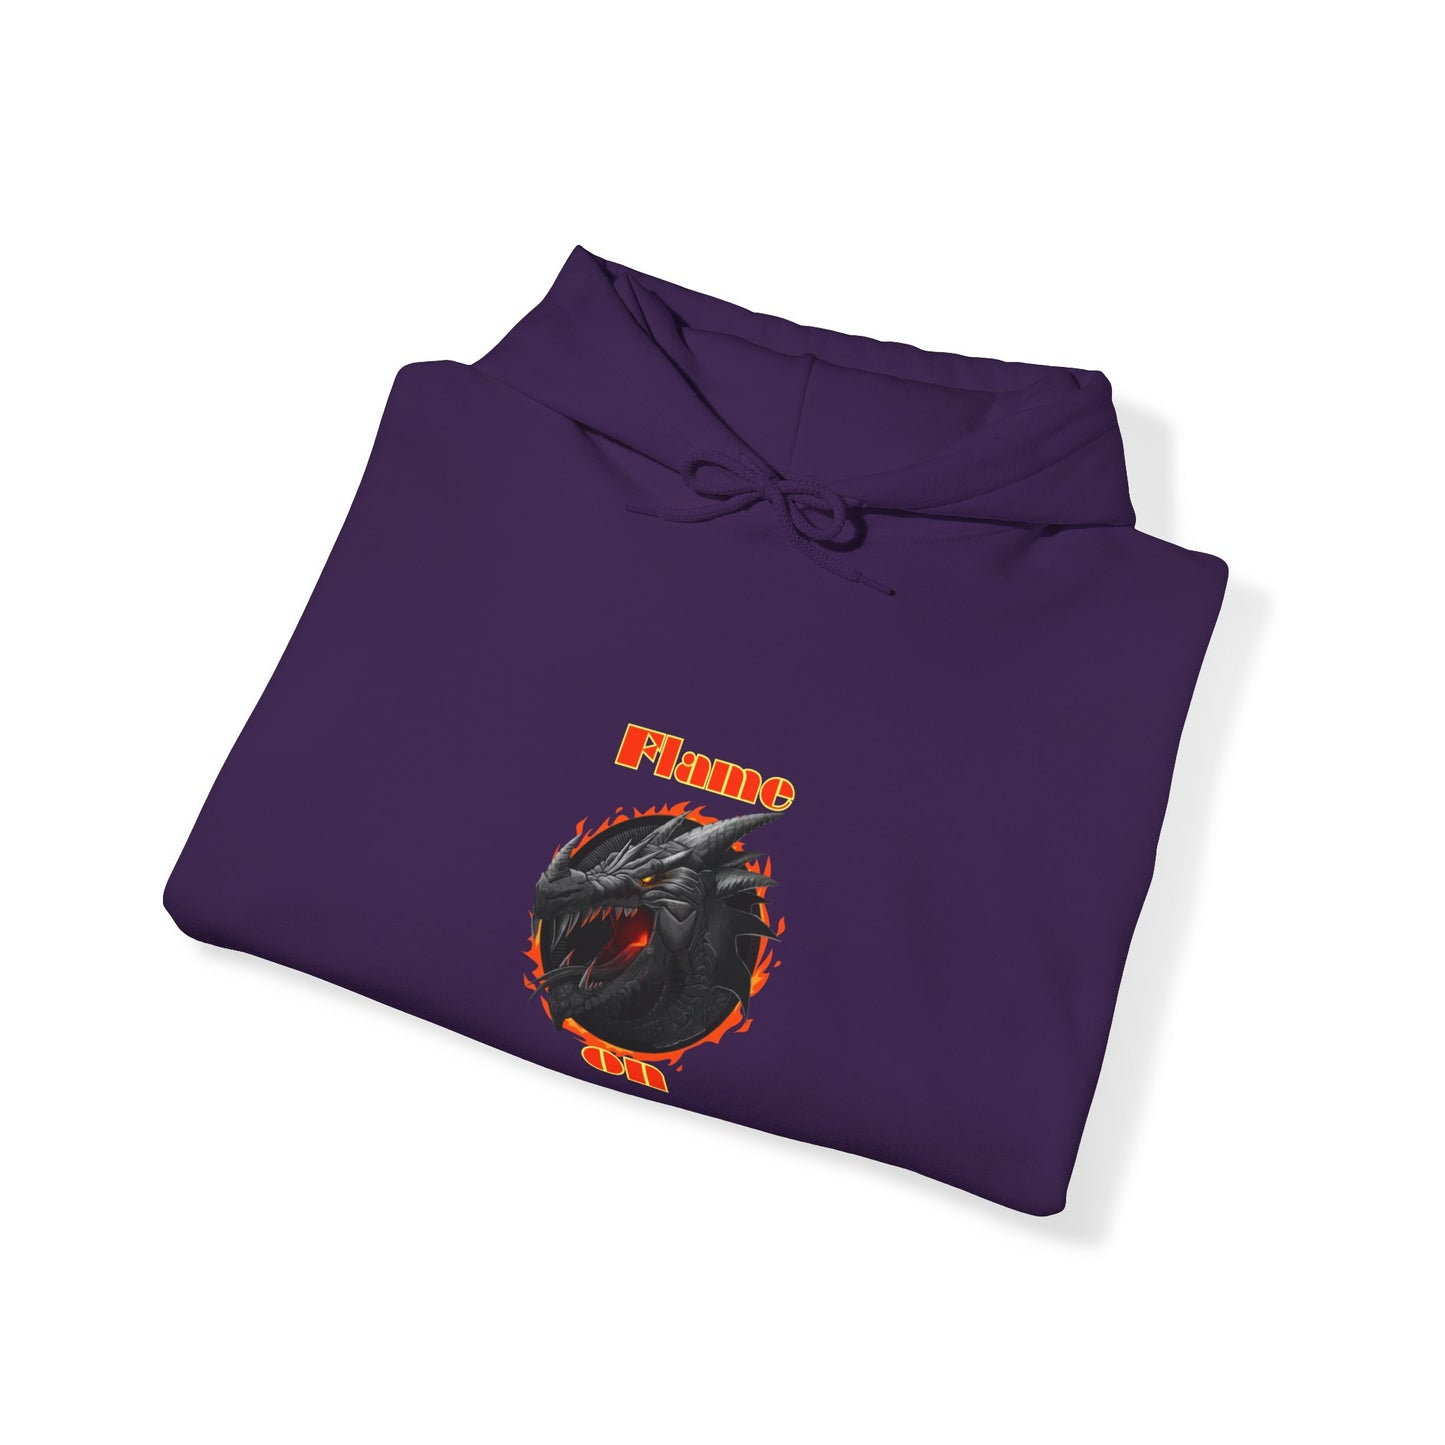 Unisex Heavy Blend™ Hooded Graphic (Flame ON) Sweatshirt